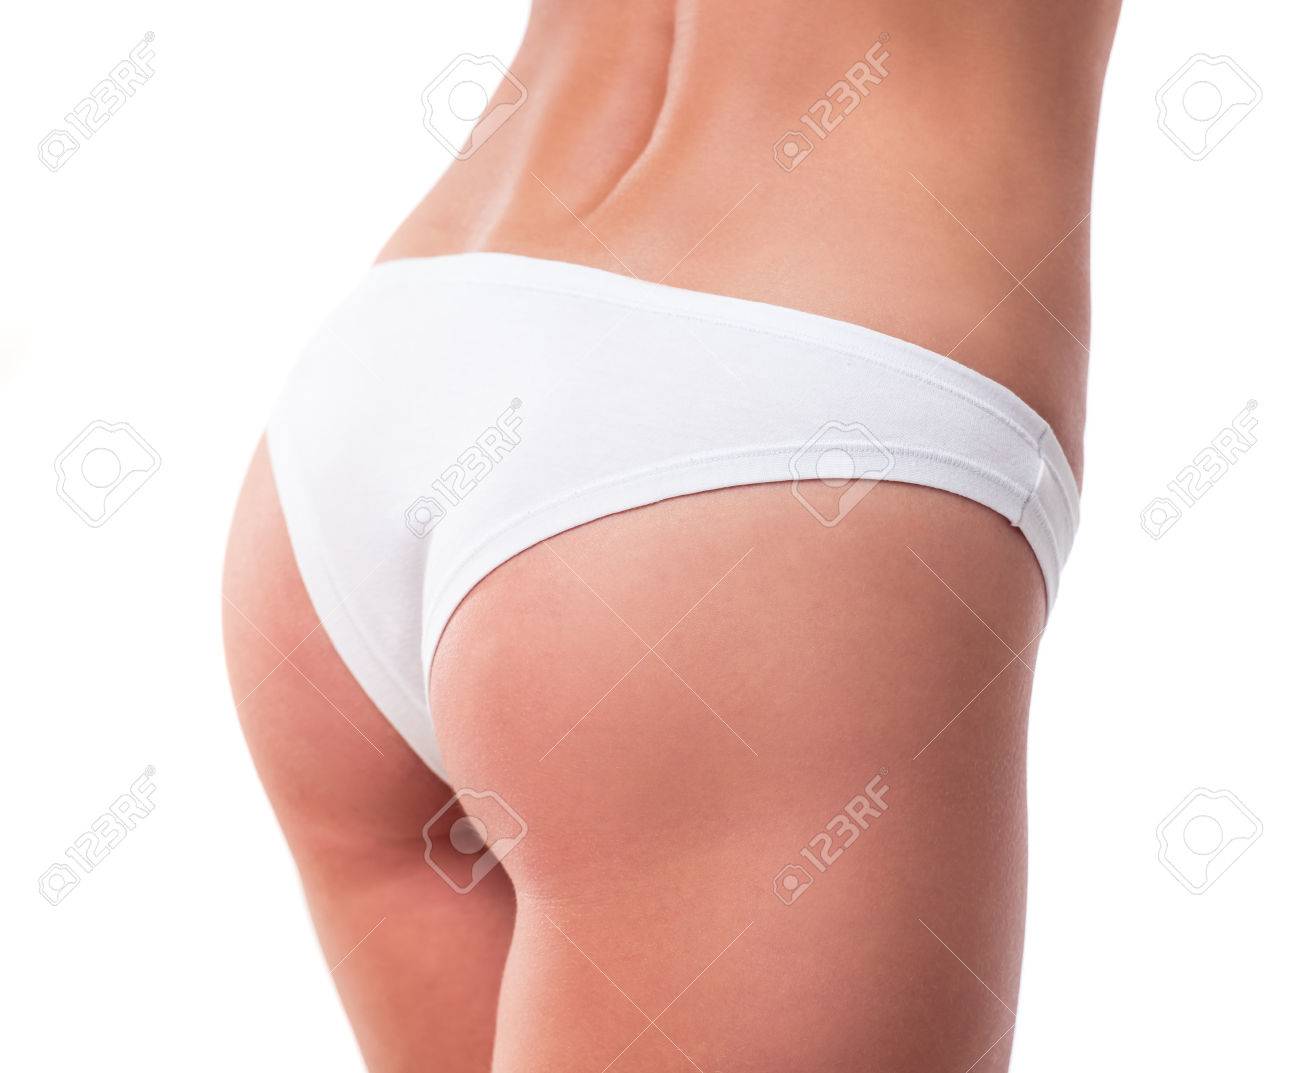 Girls ass in panties